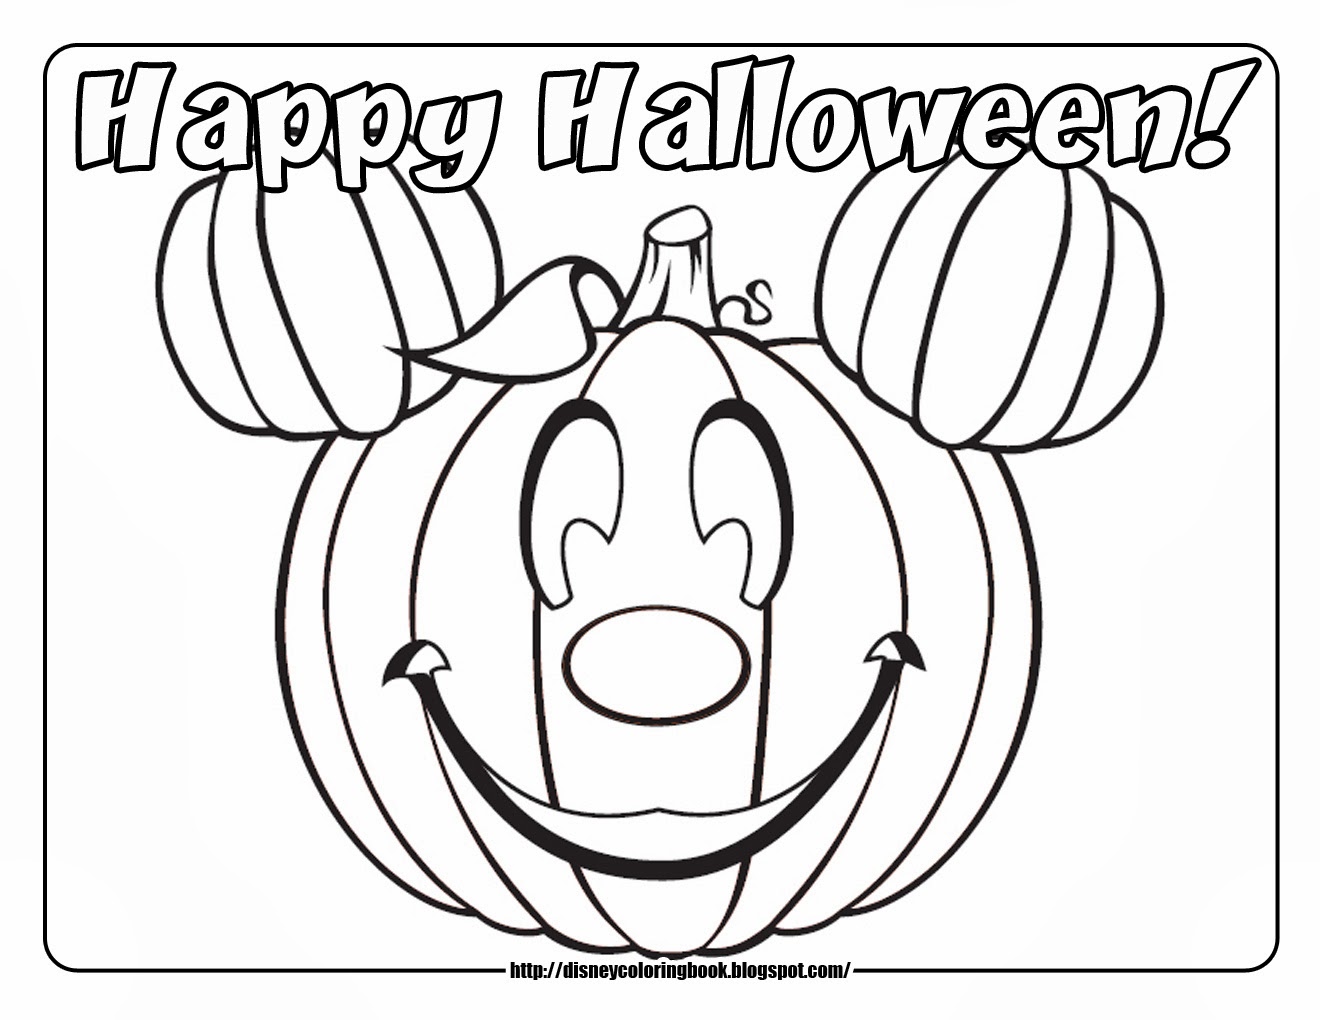 Halloween Coloring Pages - Free Printable - Minnesota Miranda